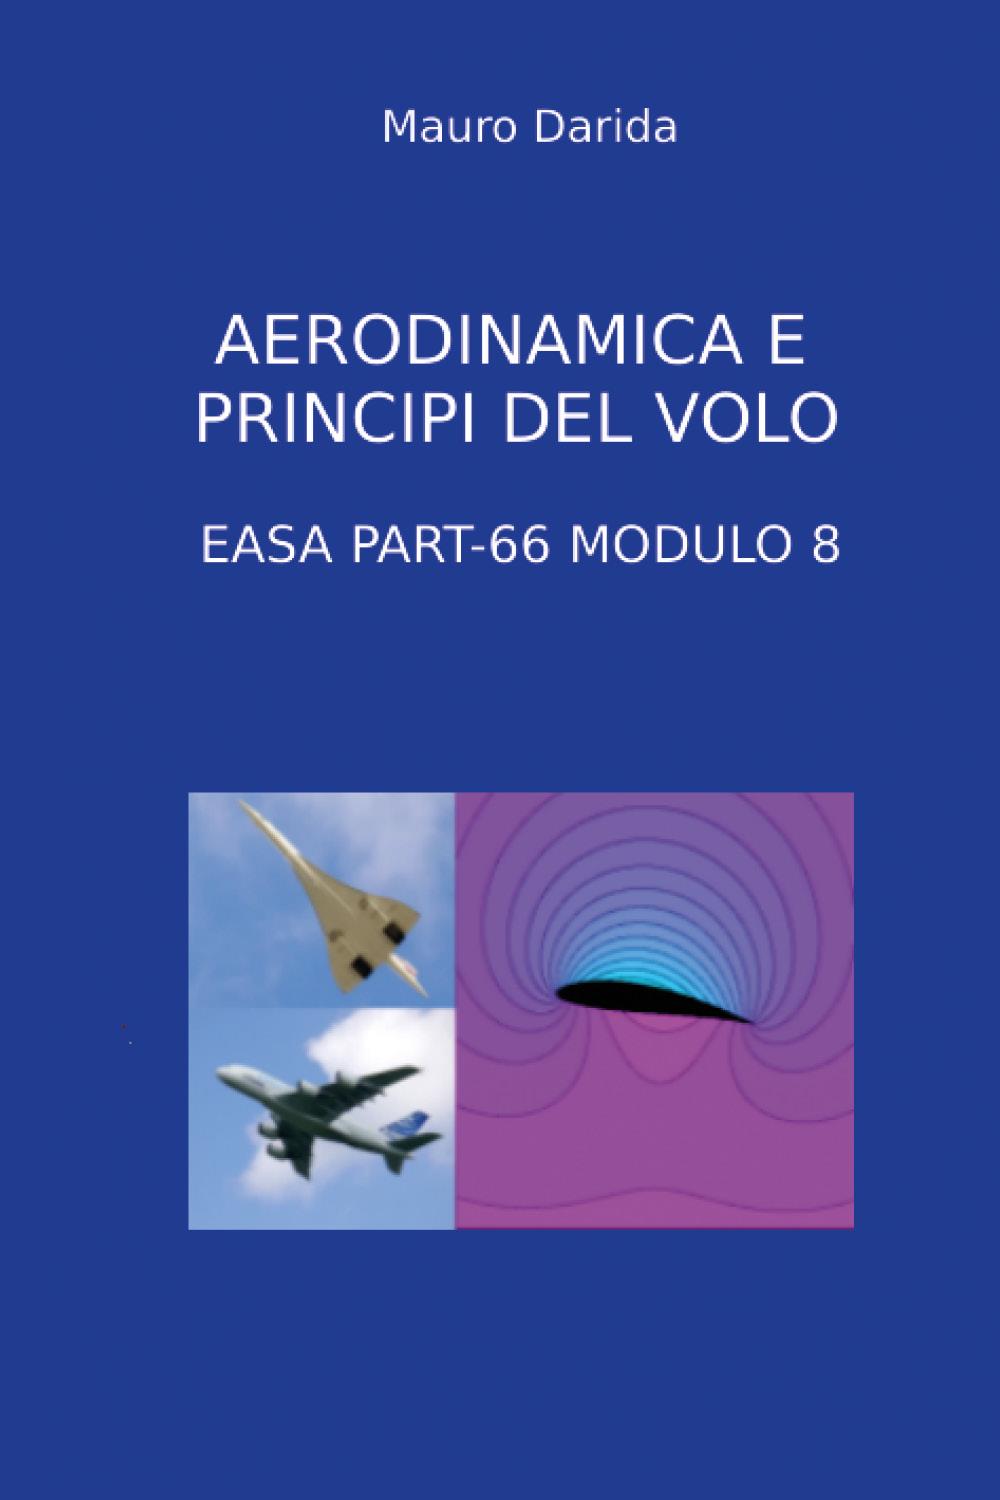 Aerodinamica e principi del volo. EASA PART-66 MODULO 8